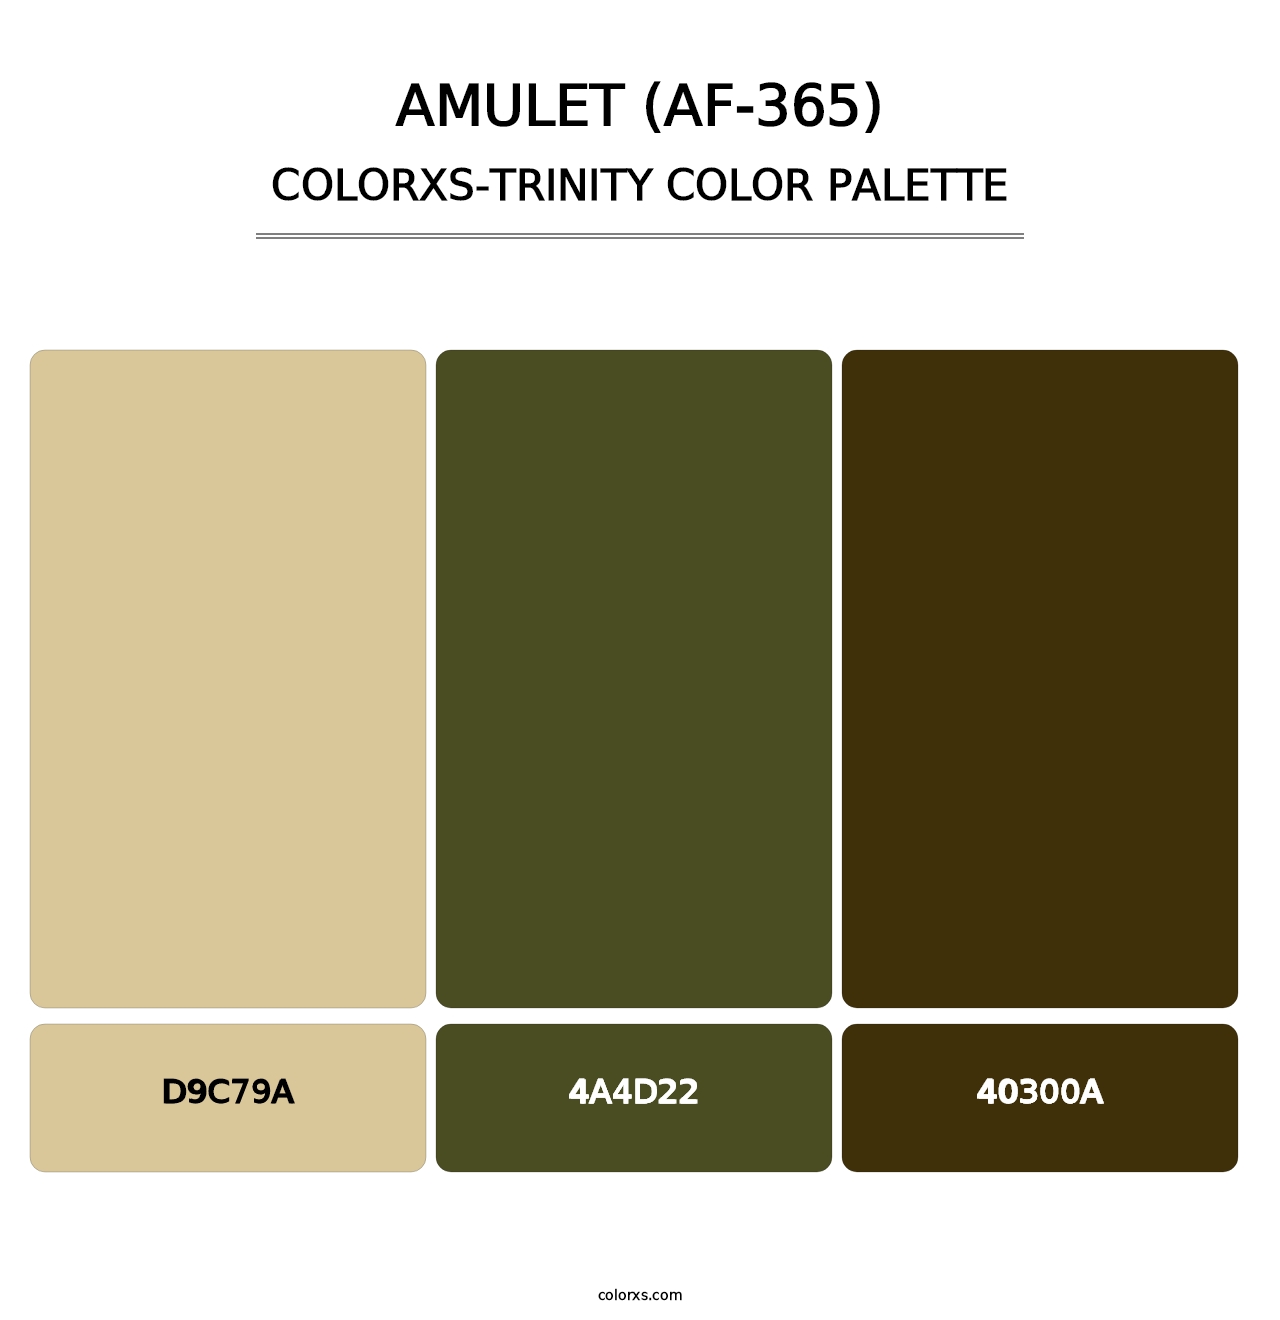 Amulet (AF-365) - Colorxs Trinity Palette